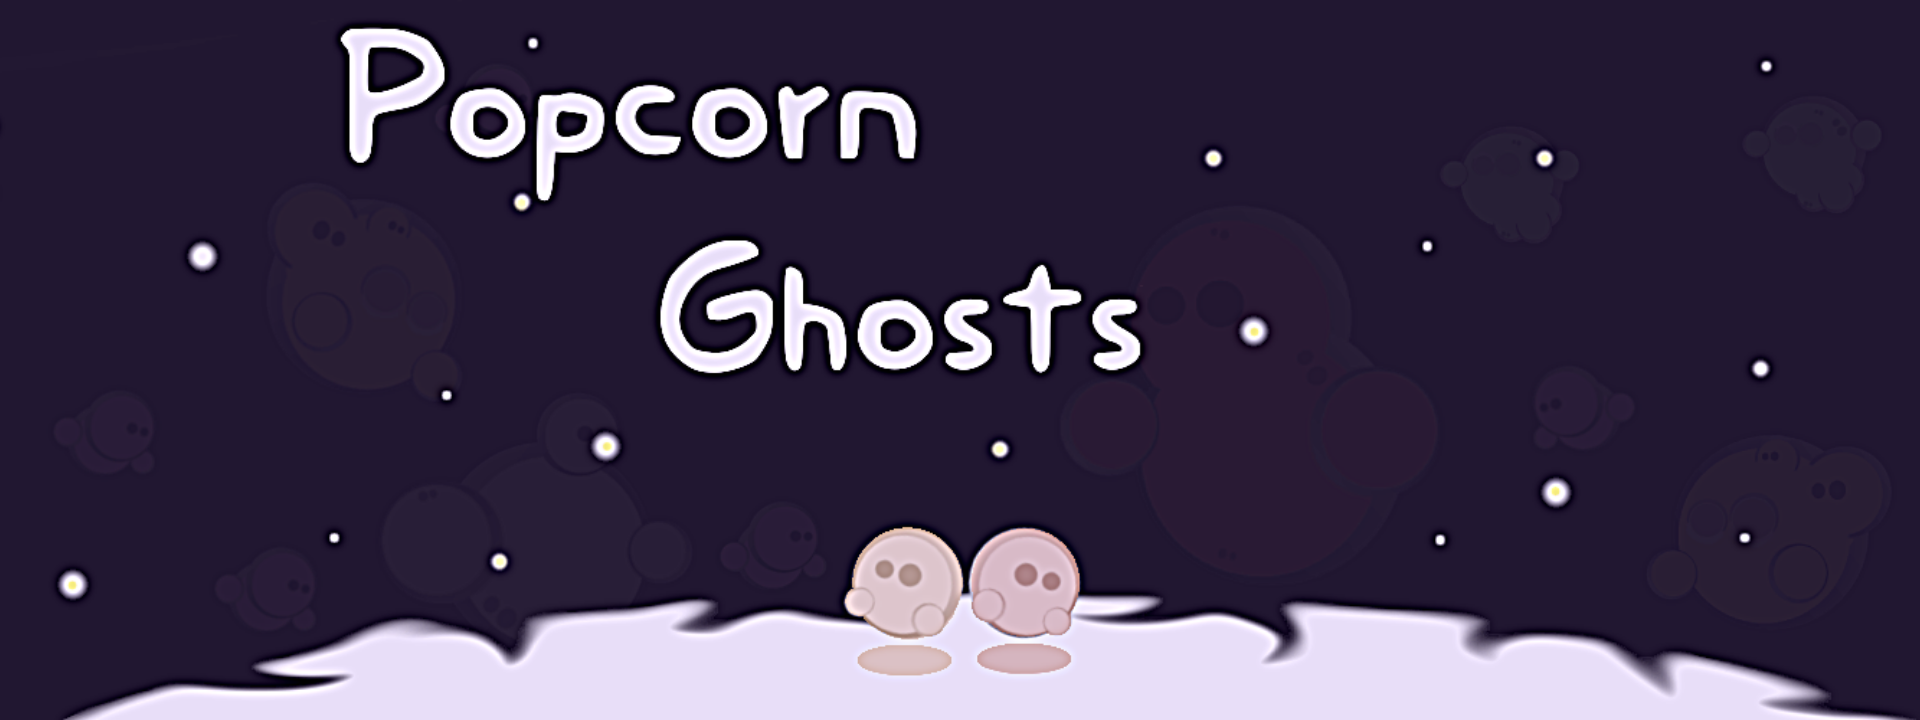 Popcorn Ghosts